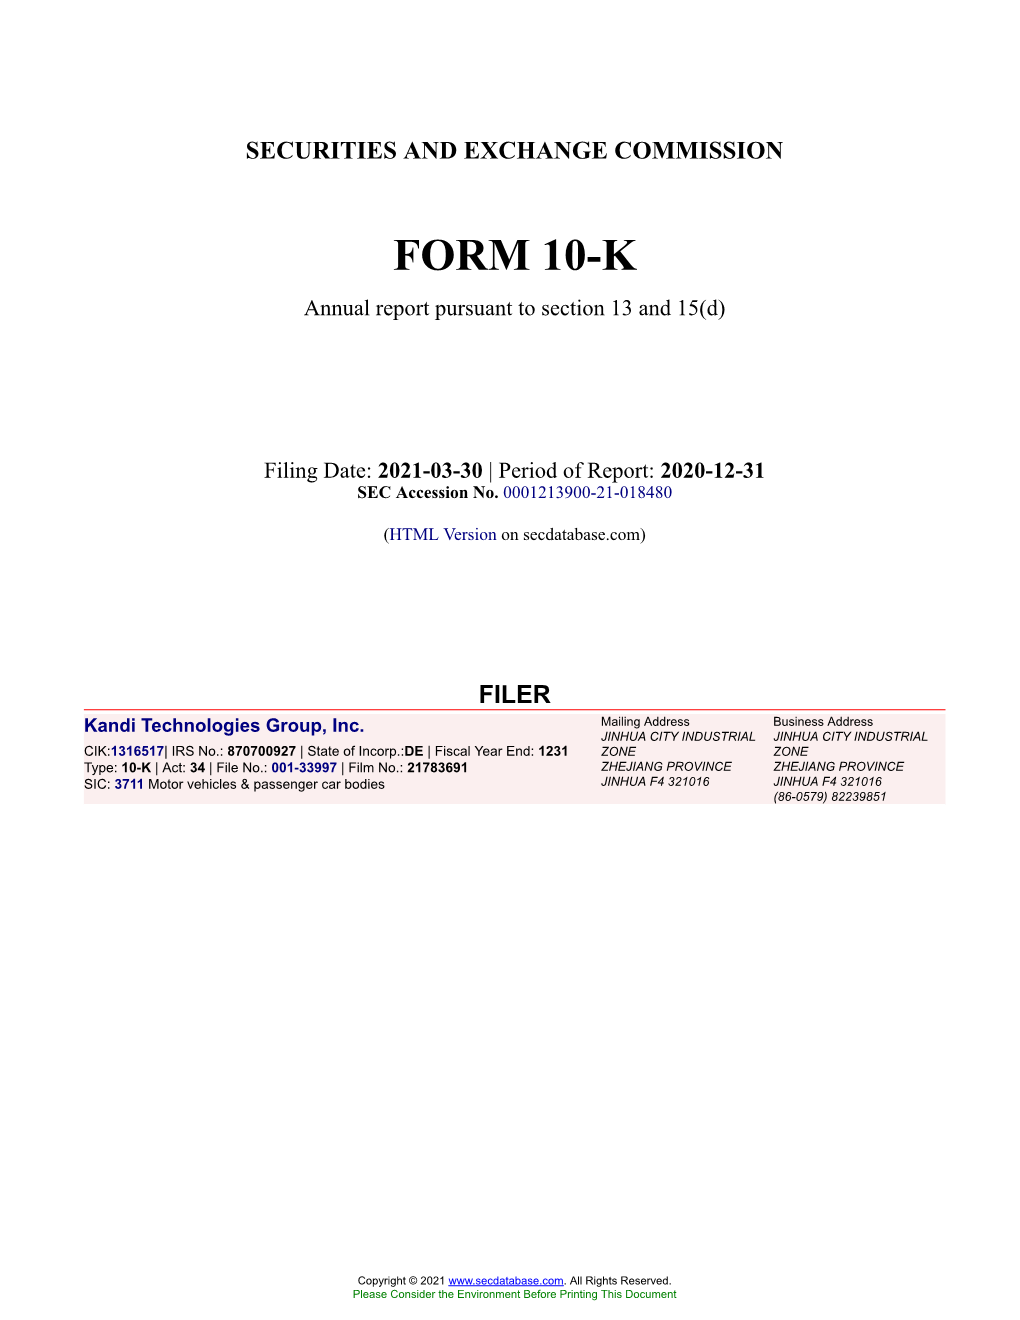 Kandi Technologies Group, Inc. Form 10-K Annual Report Filed 2021-03-30